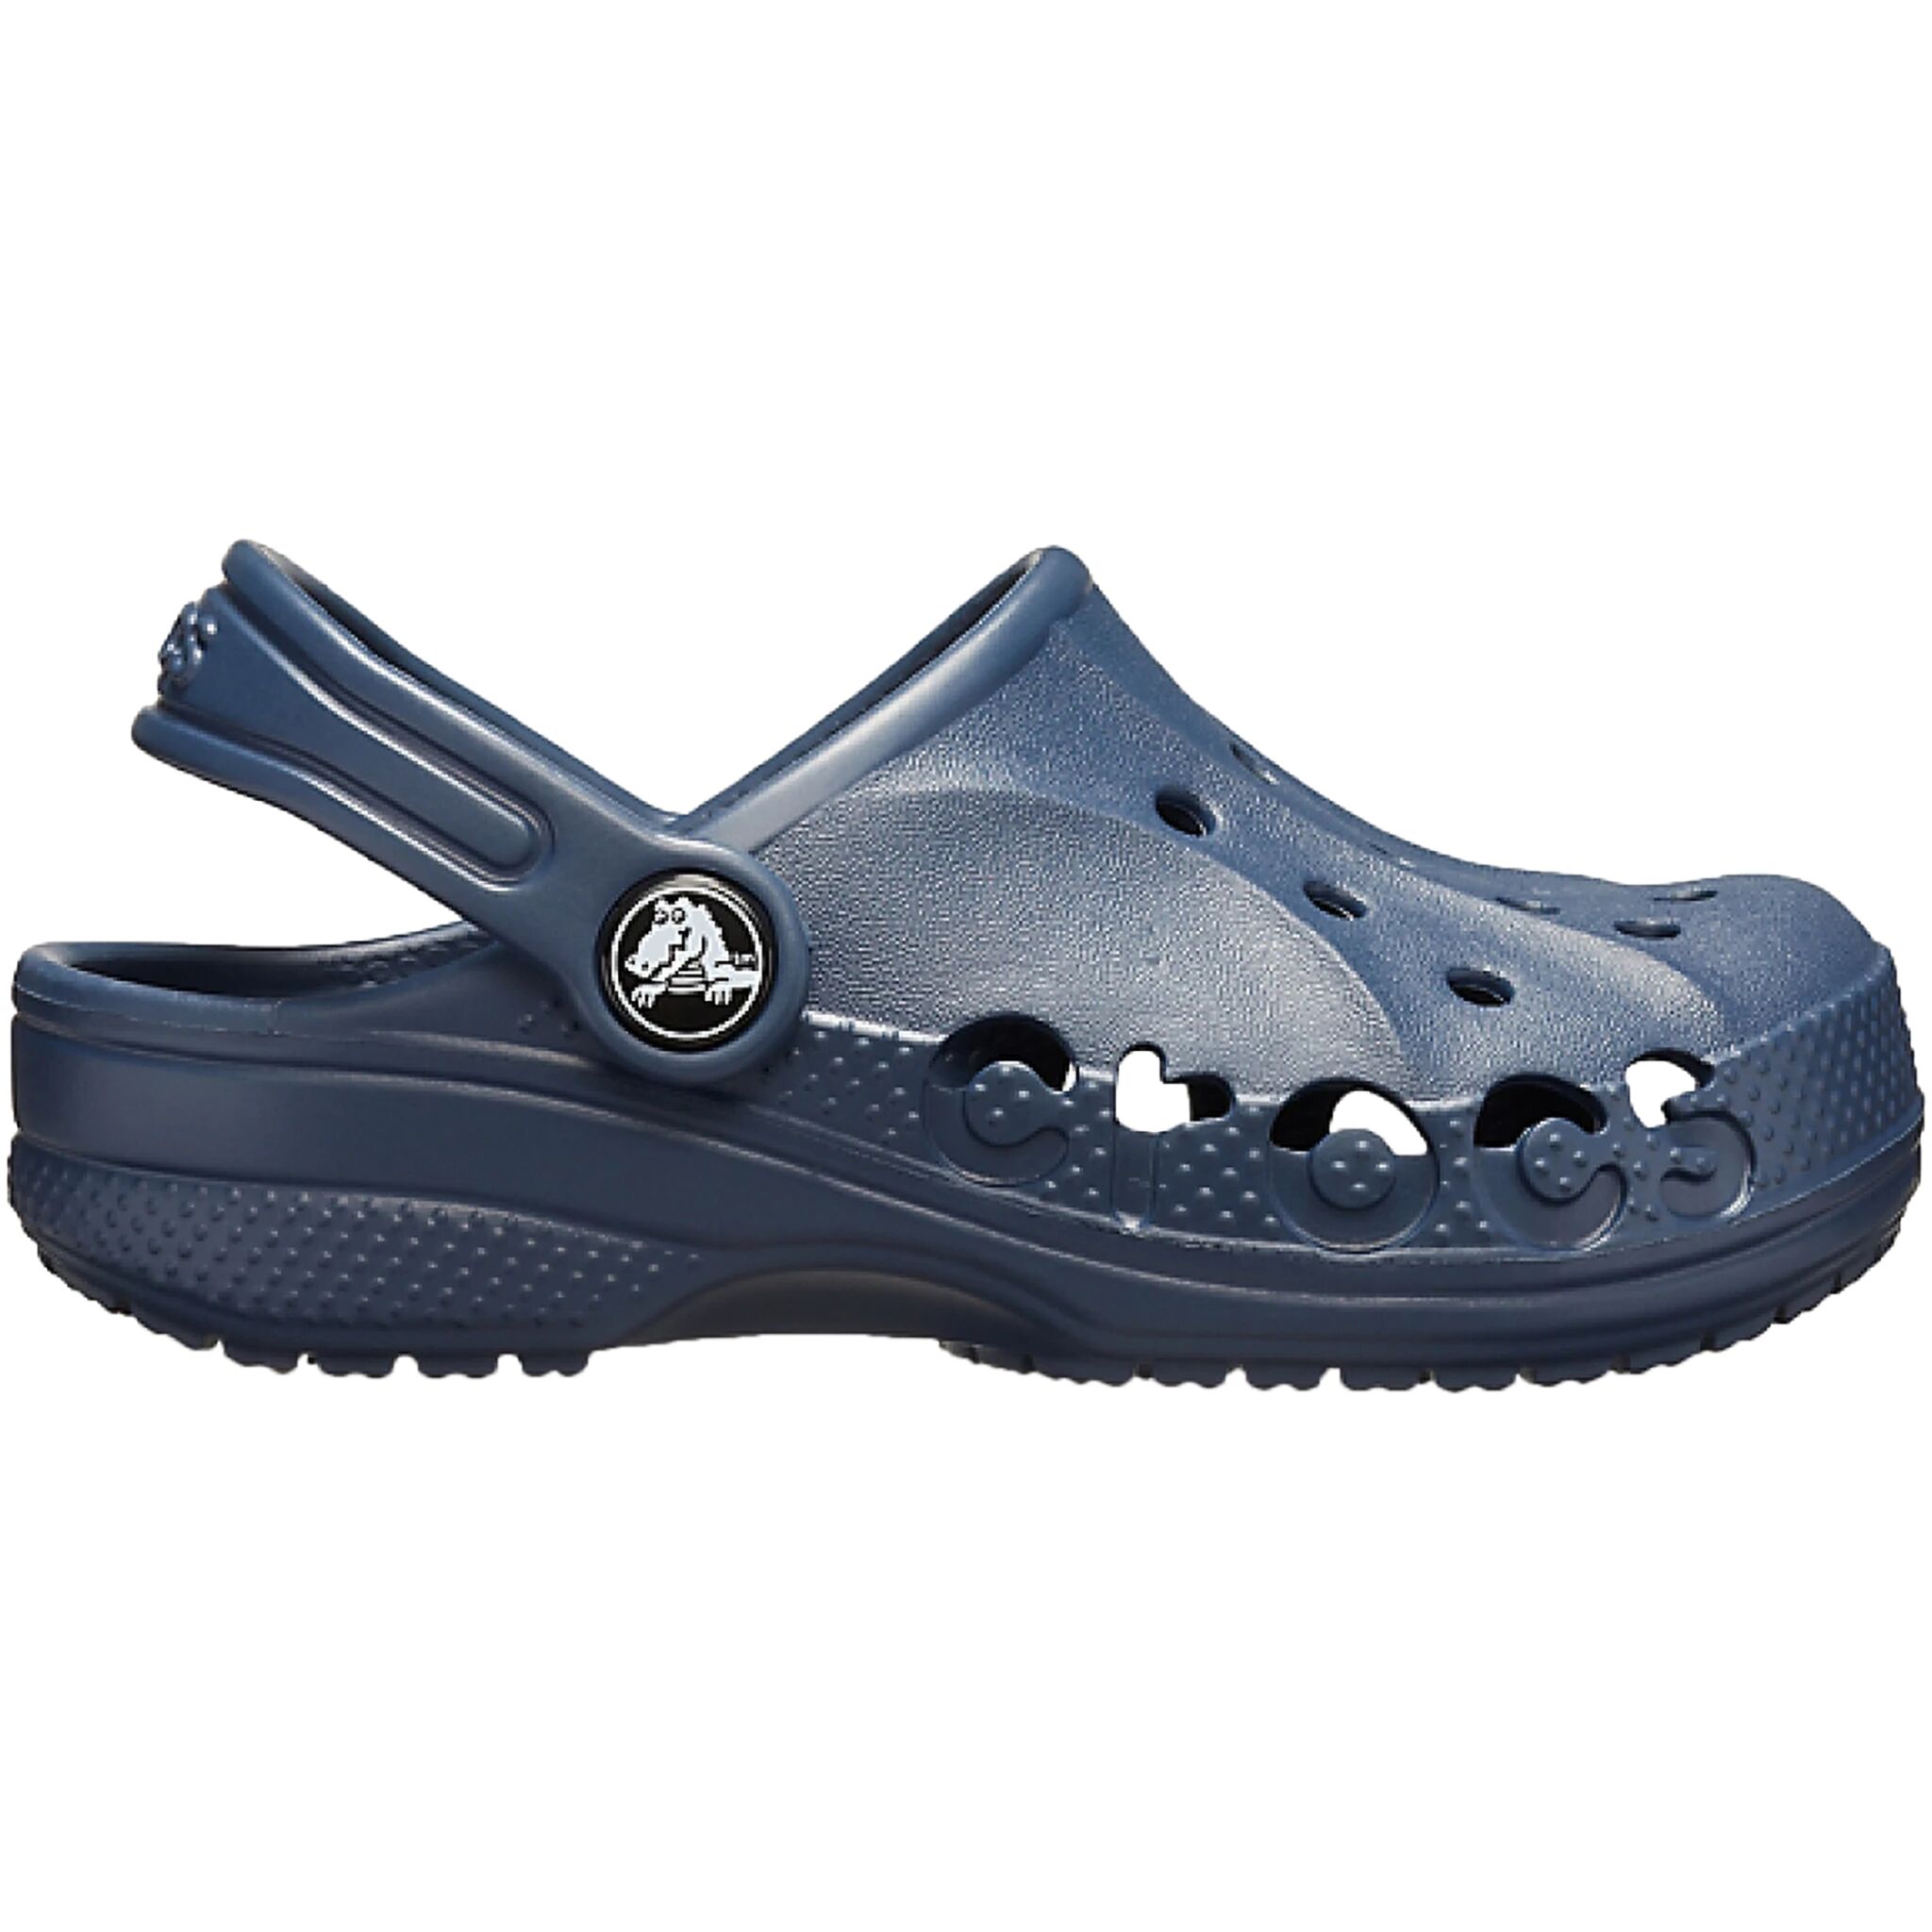 Crocs Baya, sandal barn 34-35 navy